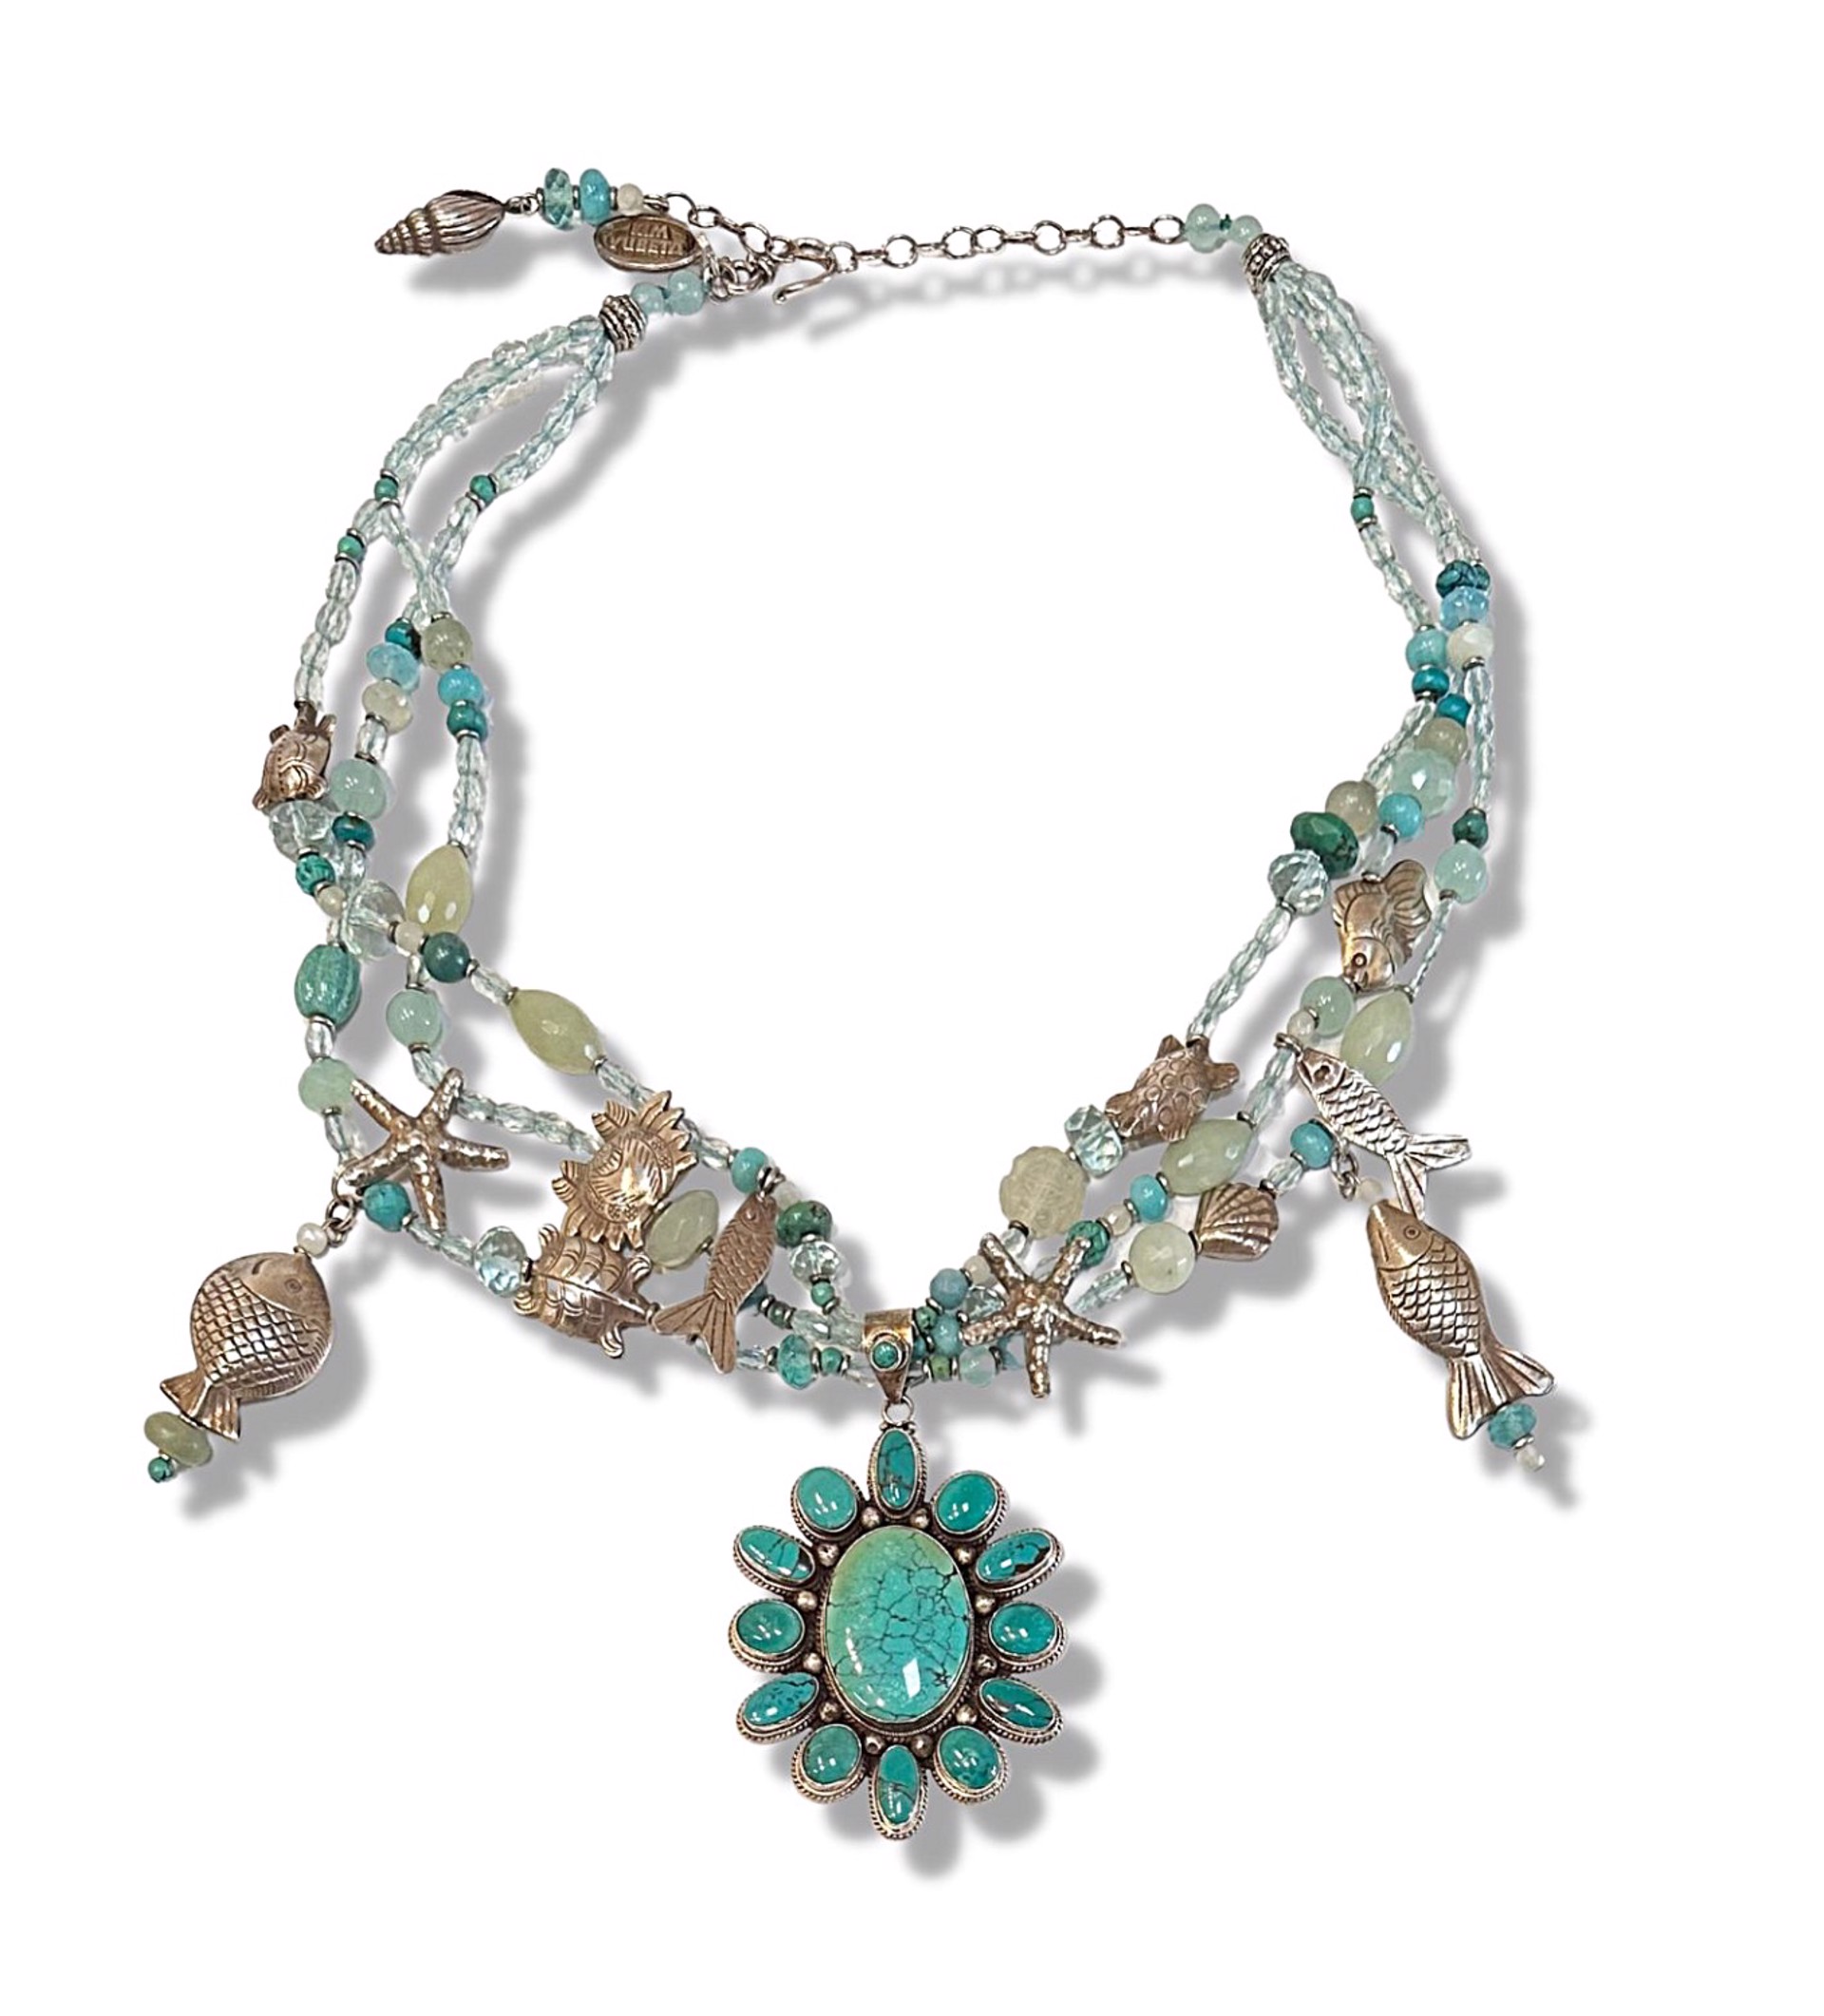 Necklace - Short 3 Strand Sea Creatures: Blue Quartz, Jade, and Turquoise #411 by Kim Yubeta